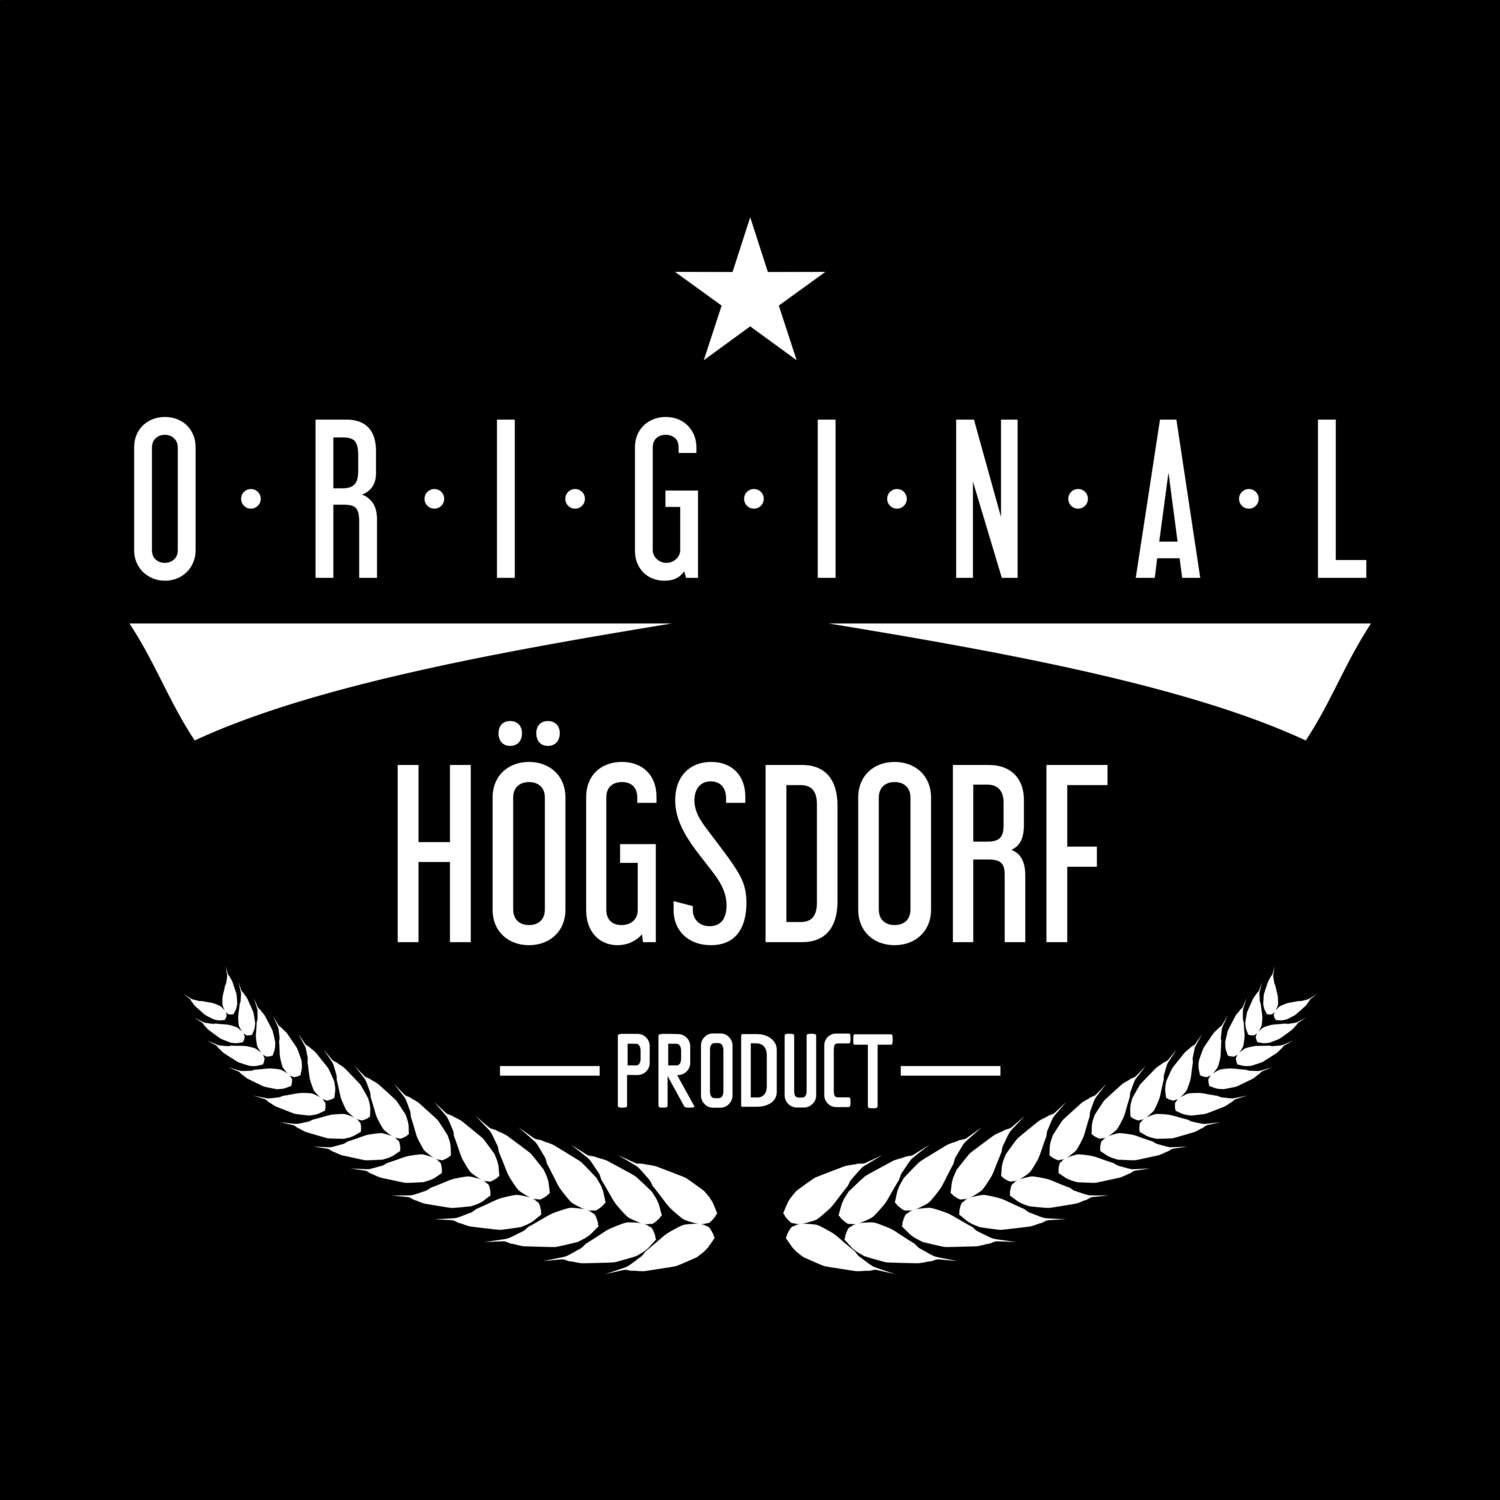 Högsdorf T-Shirt »Original Product«